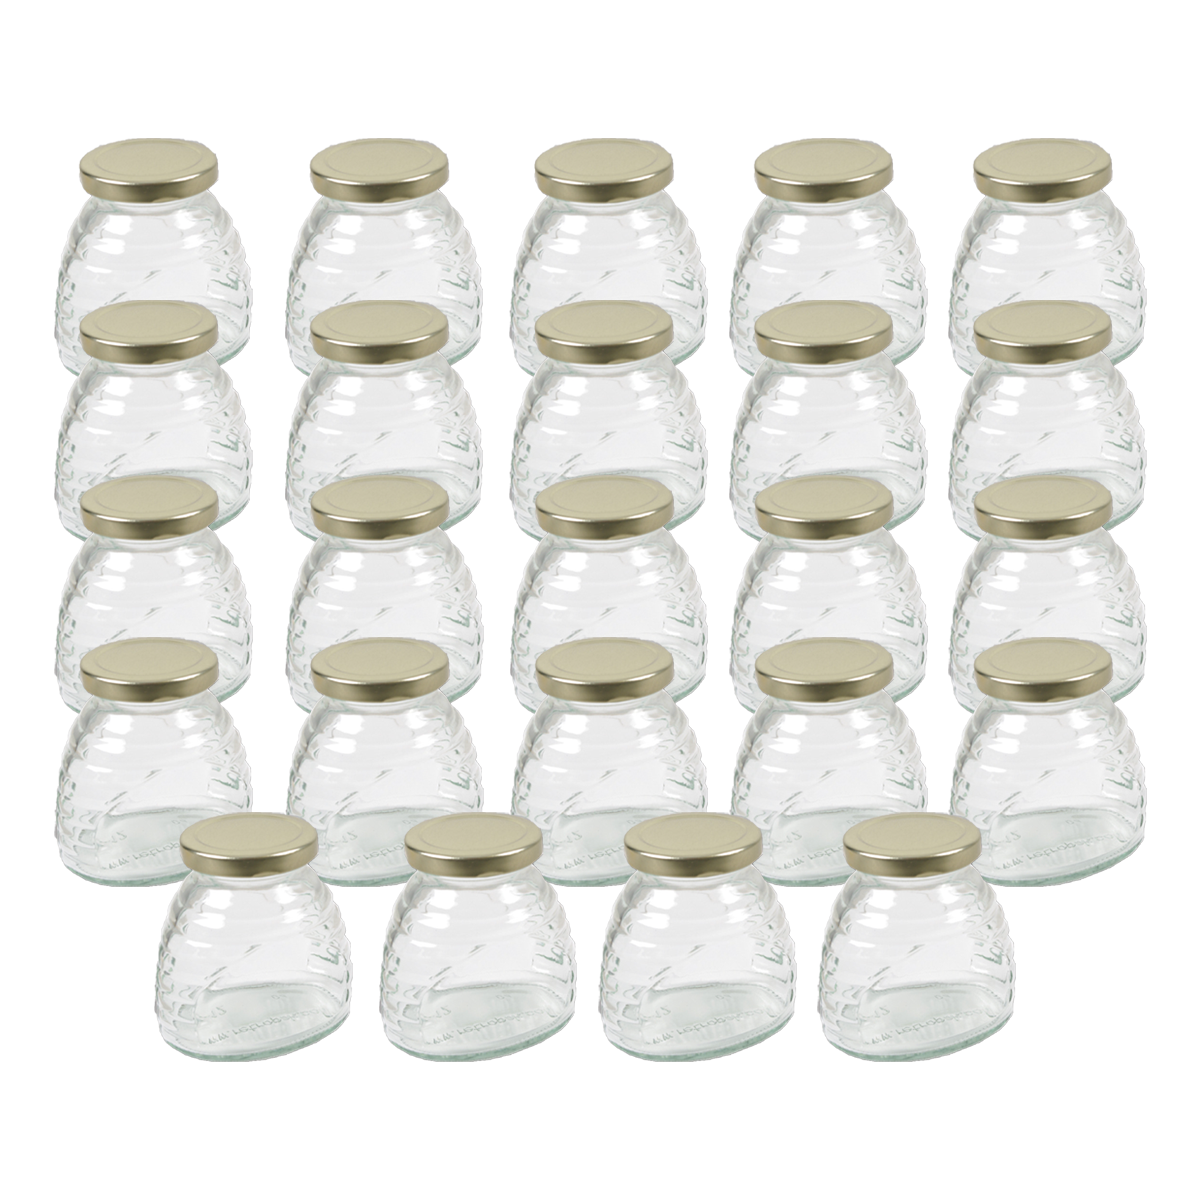 3 oz. Glass Skep Honey Jars - 24 Count Case - Includes Lids